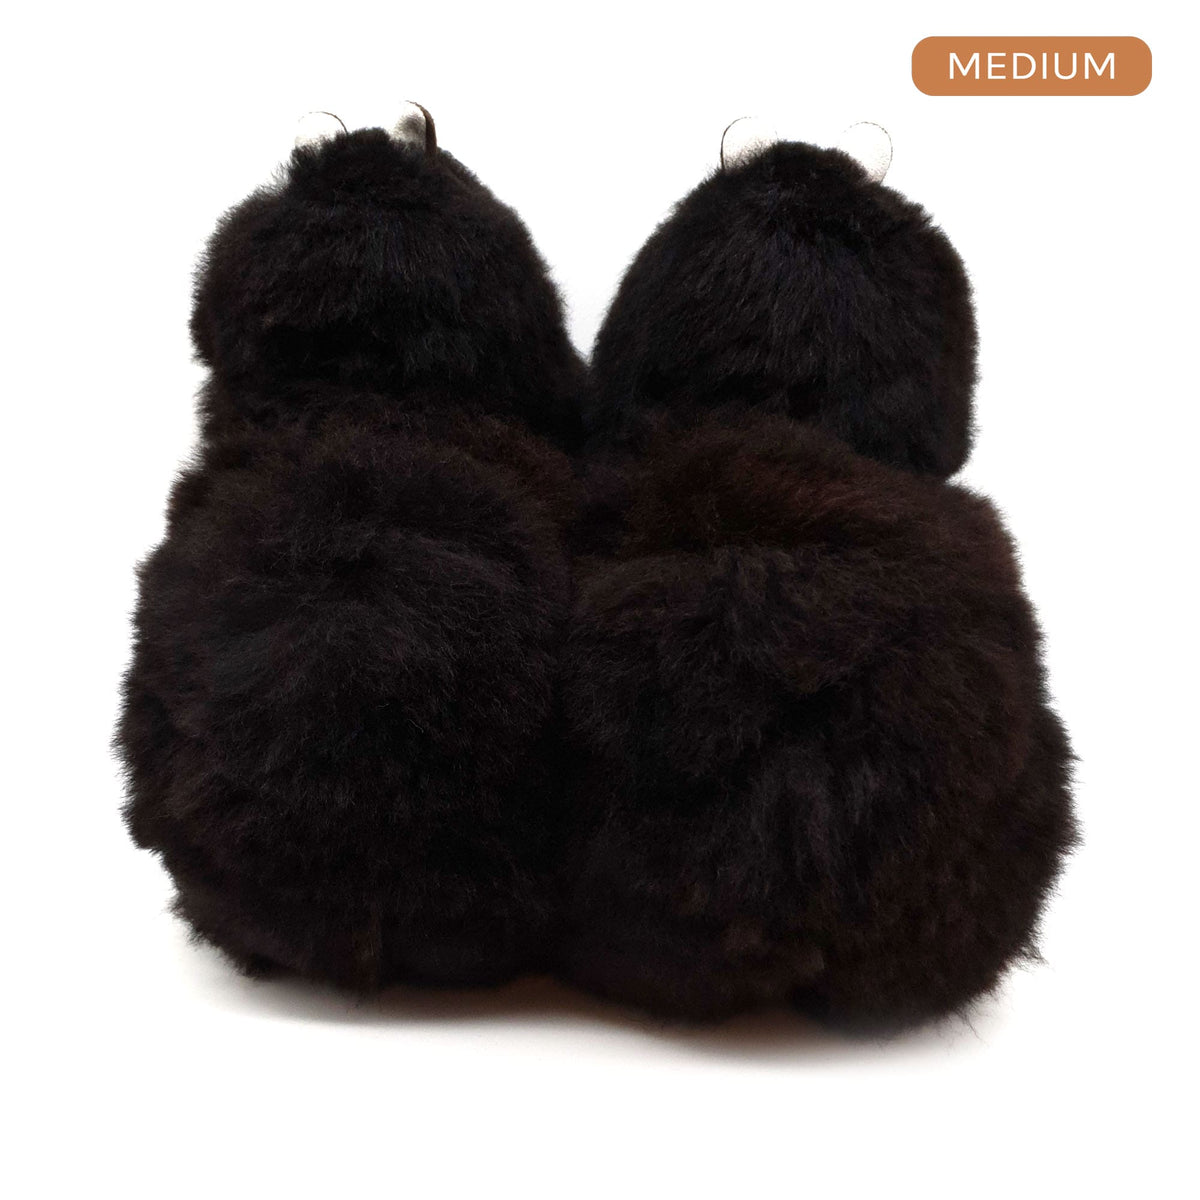 Black Panther - Medium Alpaca Toy (32cm) - Limited Edition